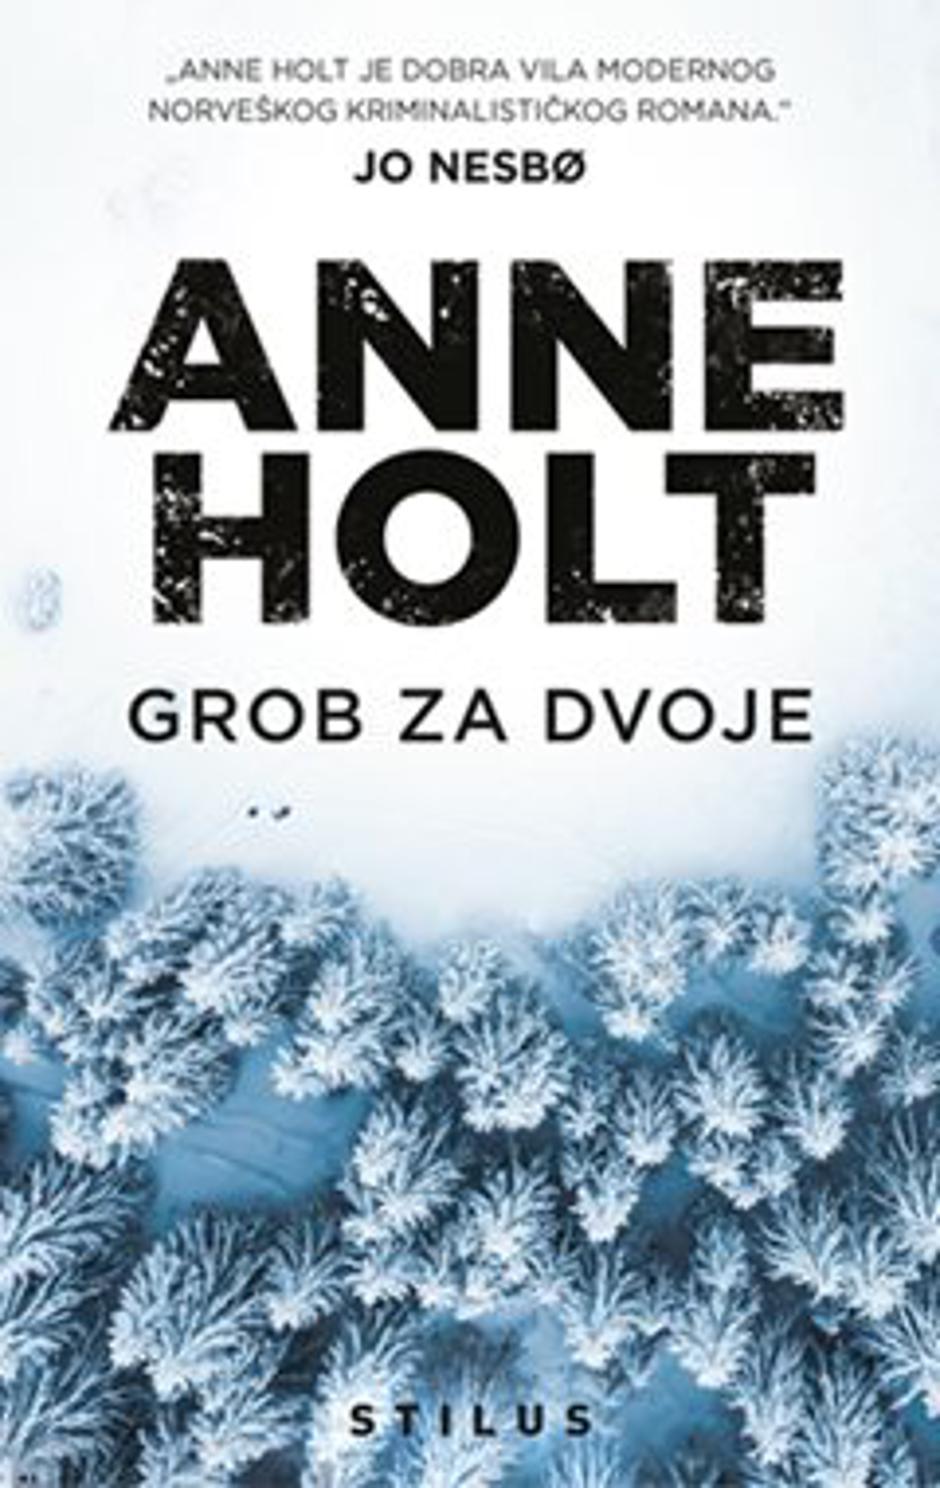 Anne Holt - 'Grob za dvoje' knjiga | Author: PROMO